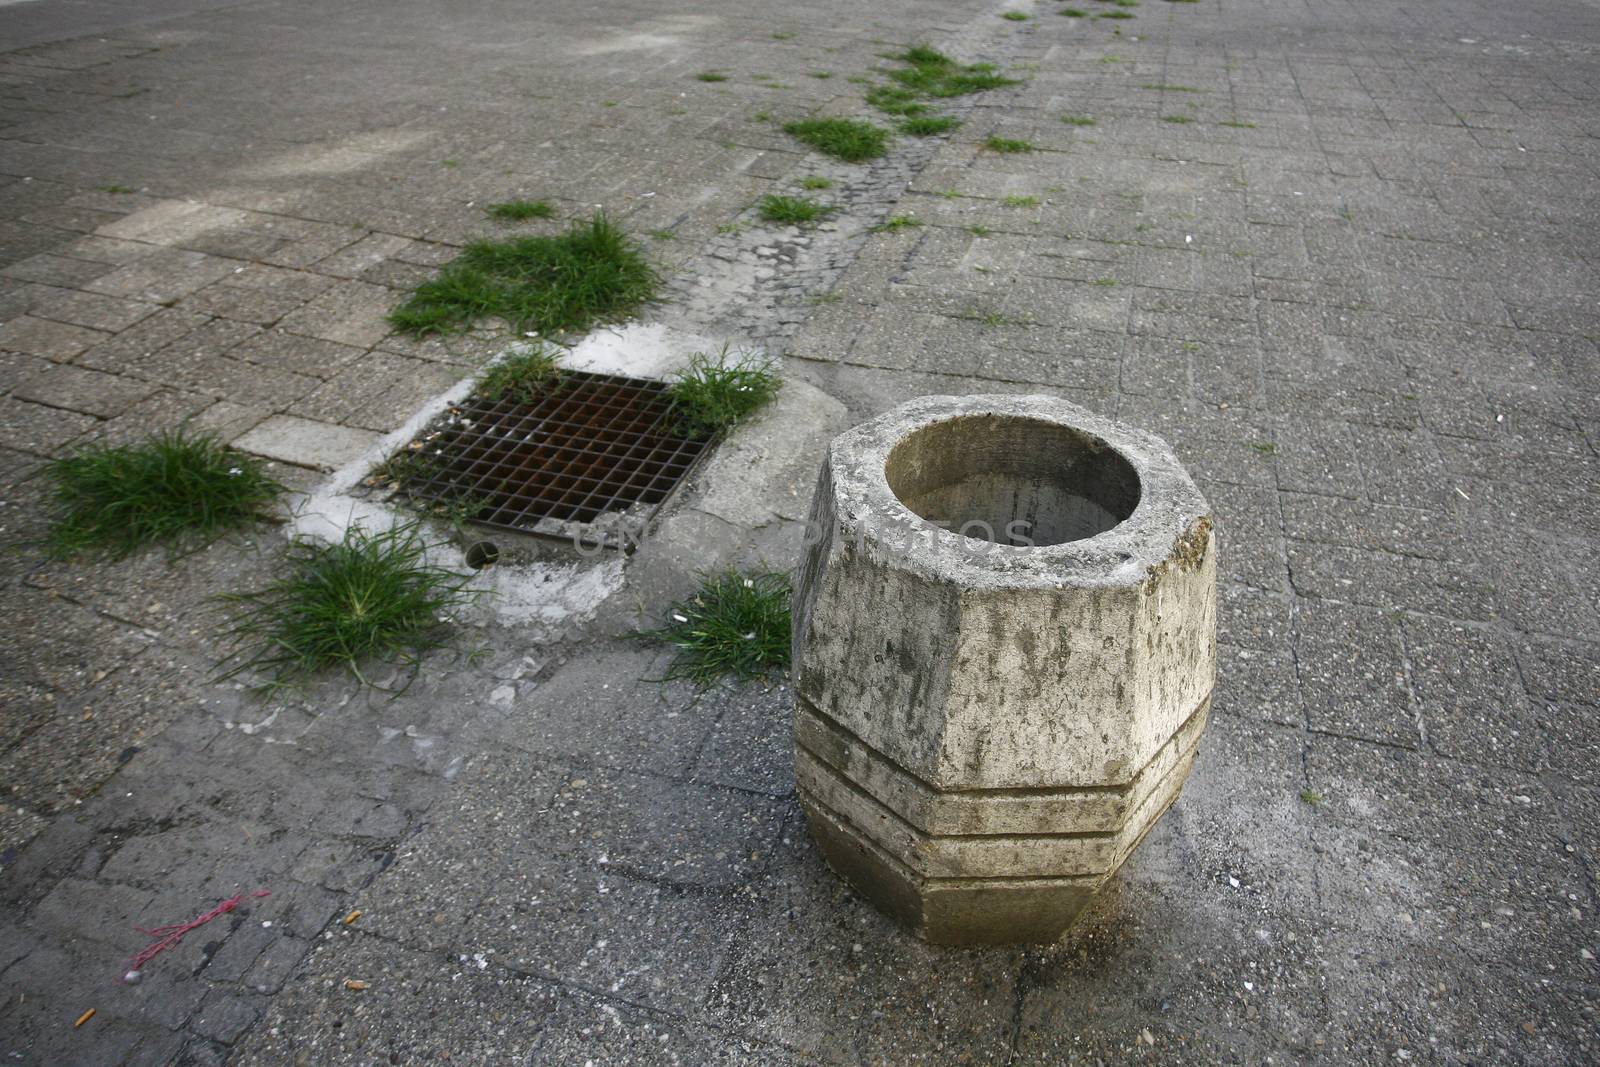 rusty stone trash can in street near manhole